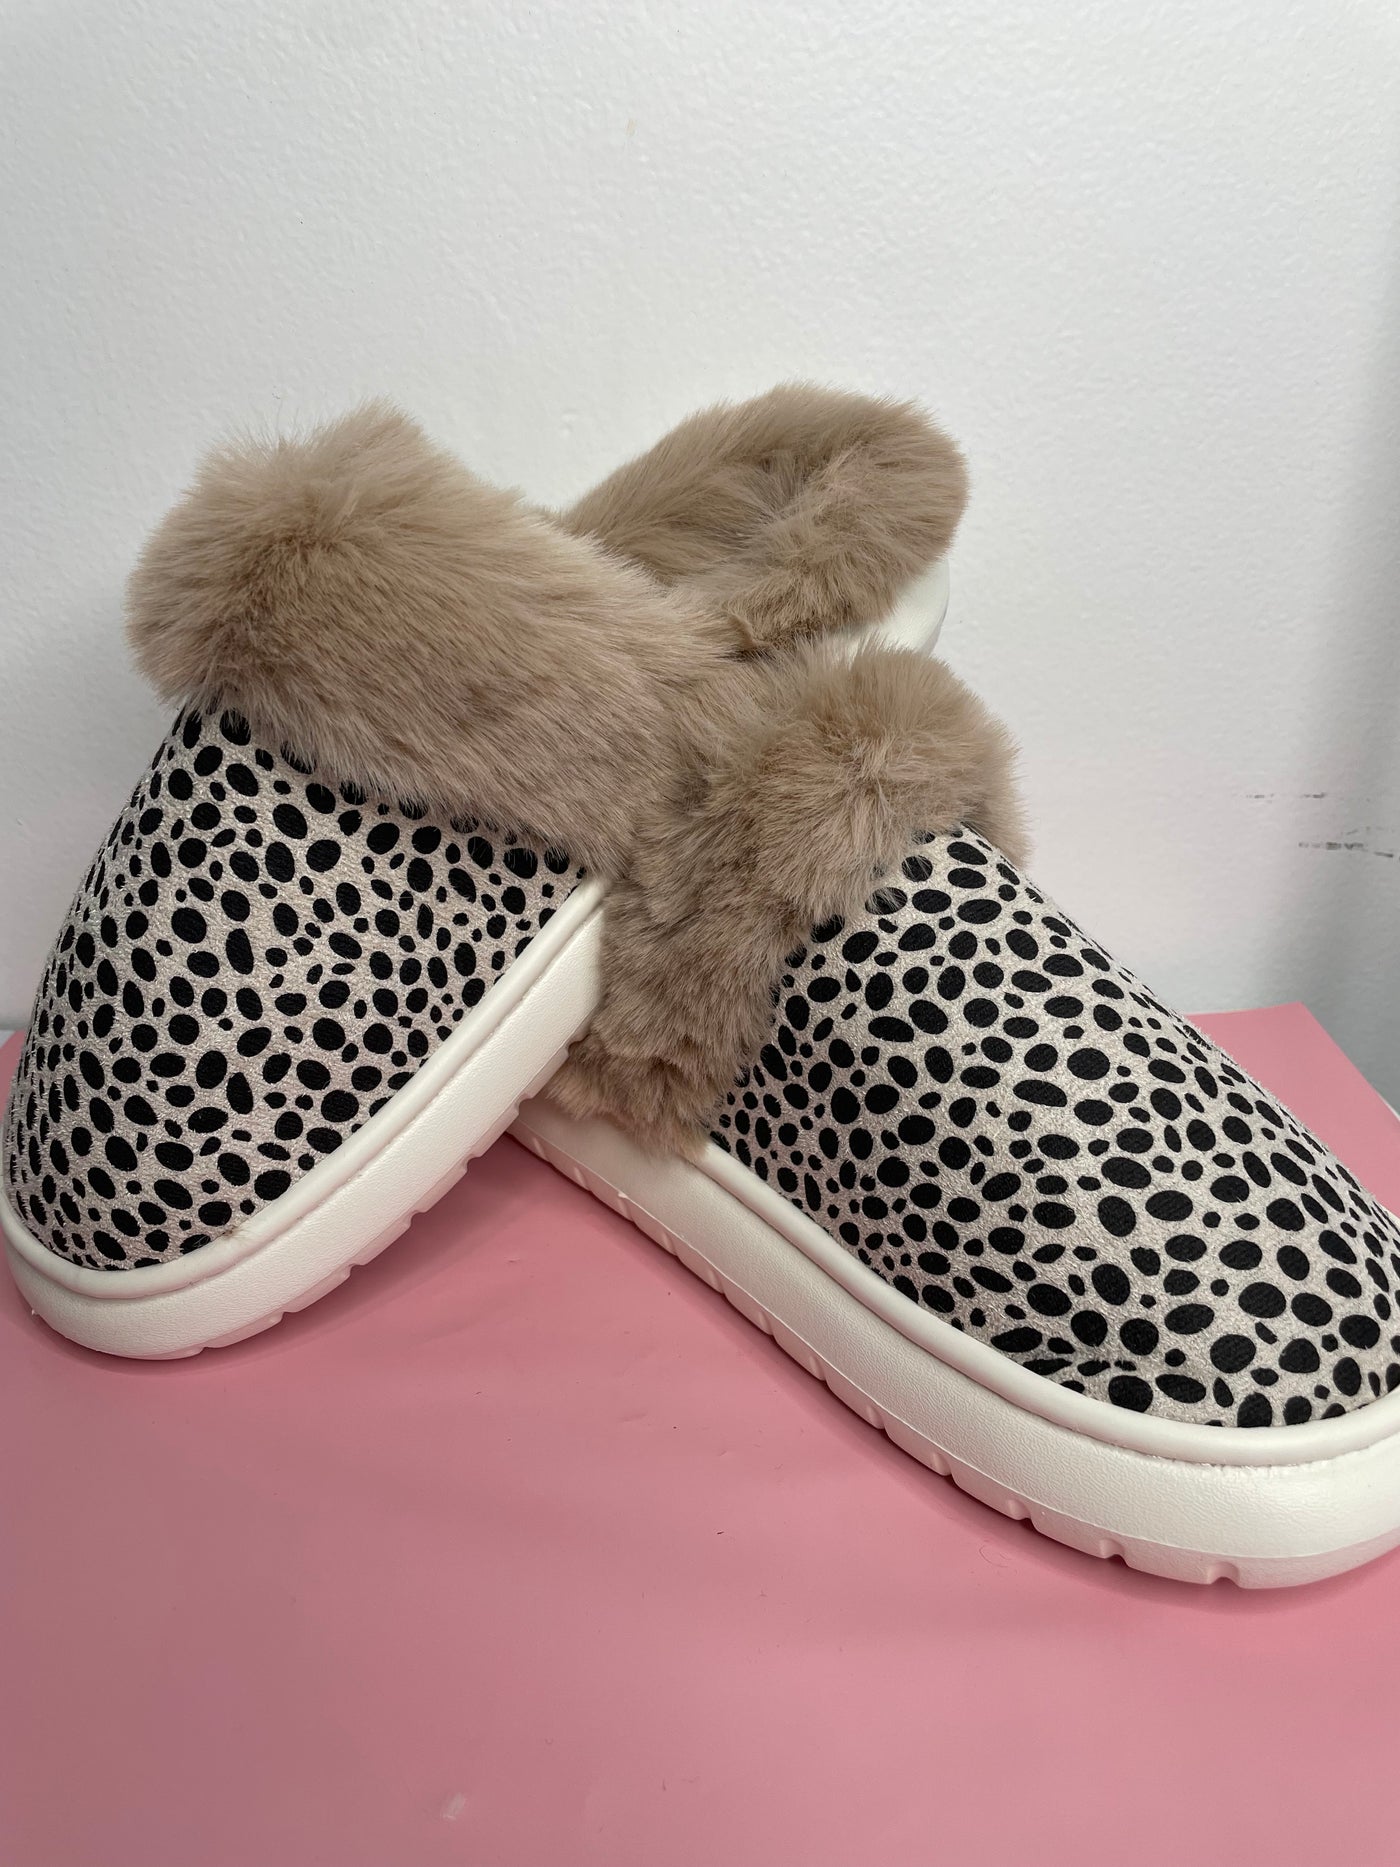 Leopard Furry Slippers